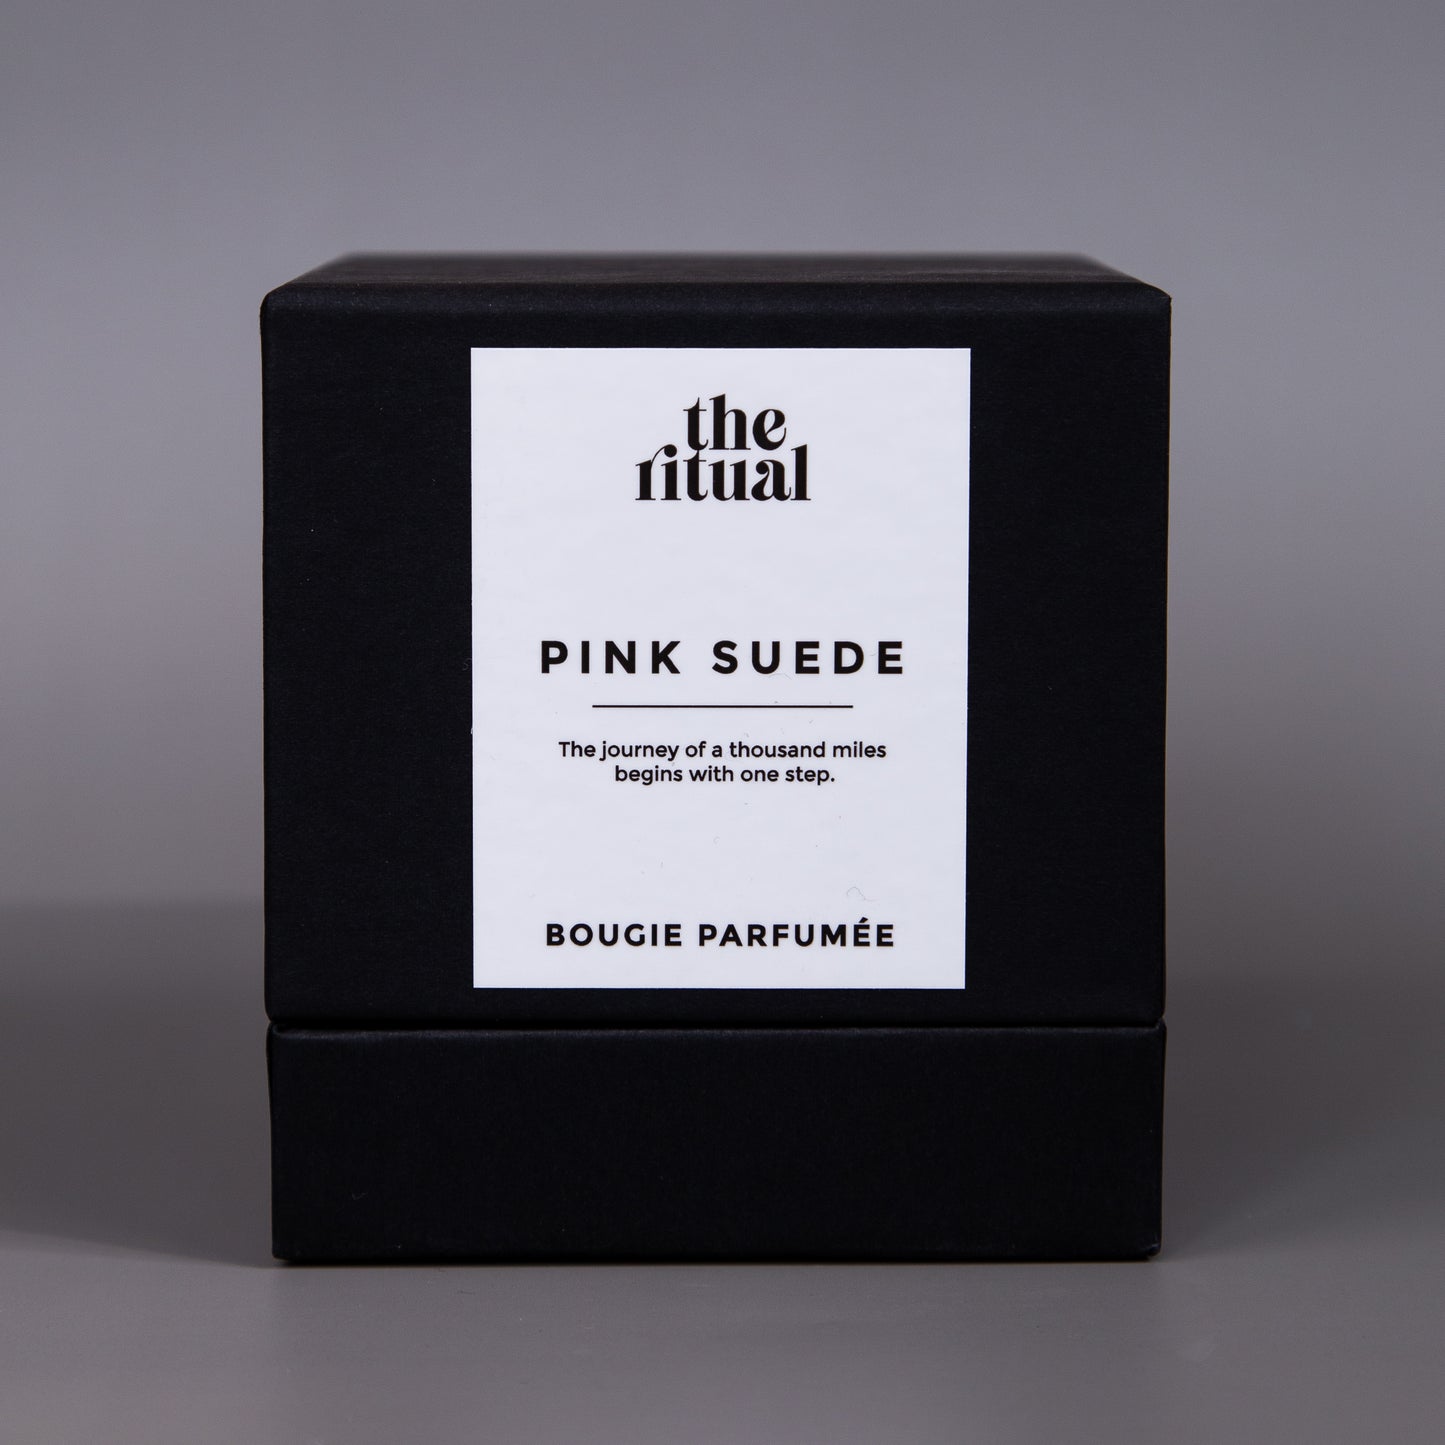 Pink Suede - 8oz Candle Bougie Parfumee